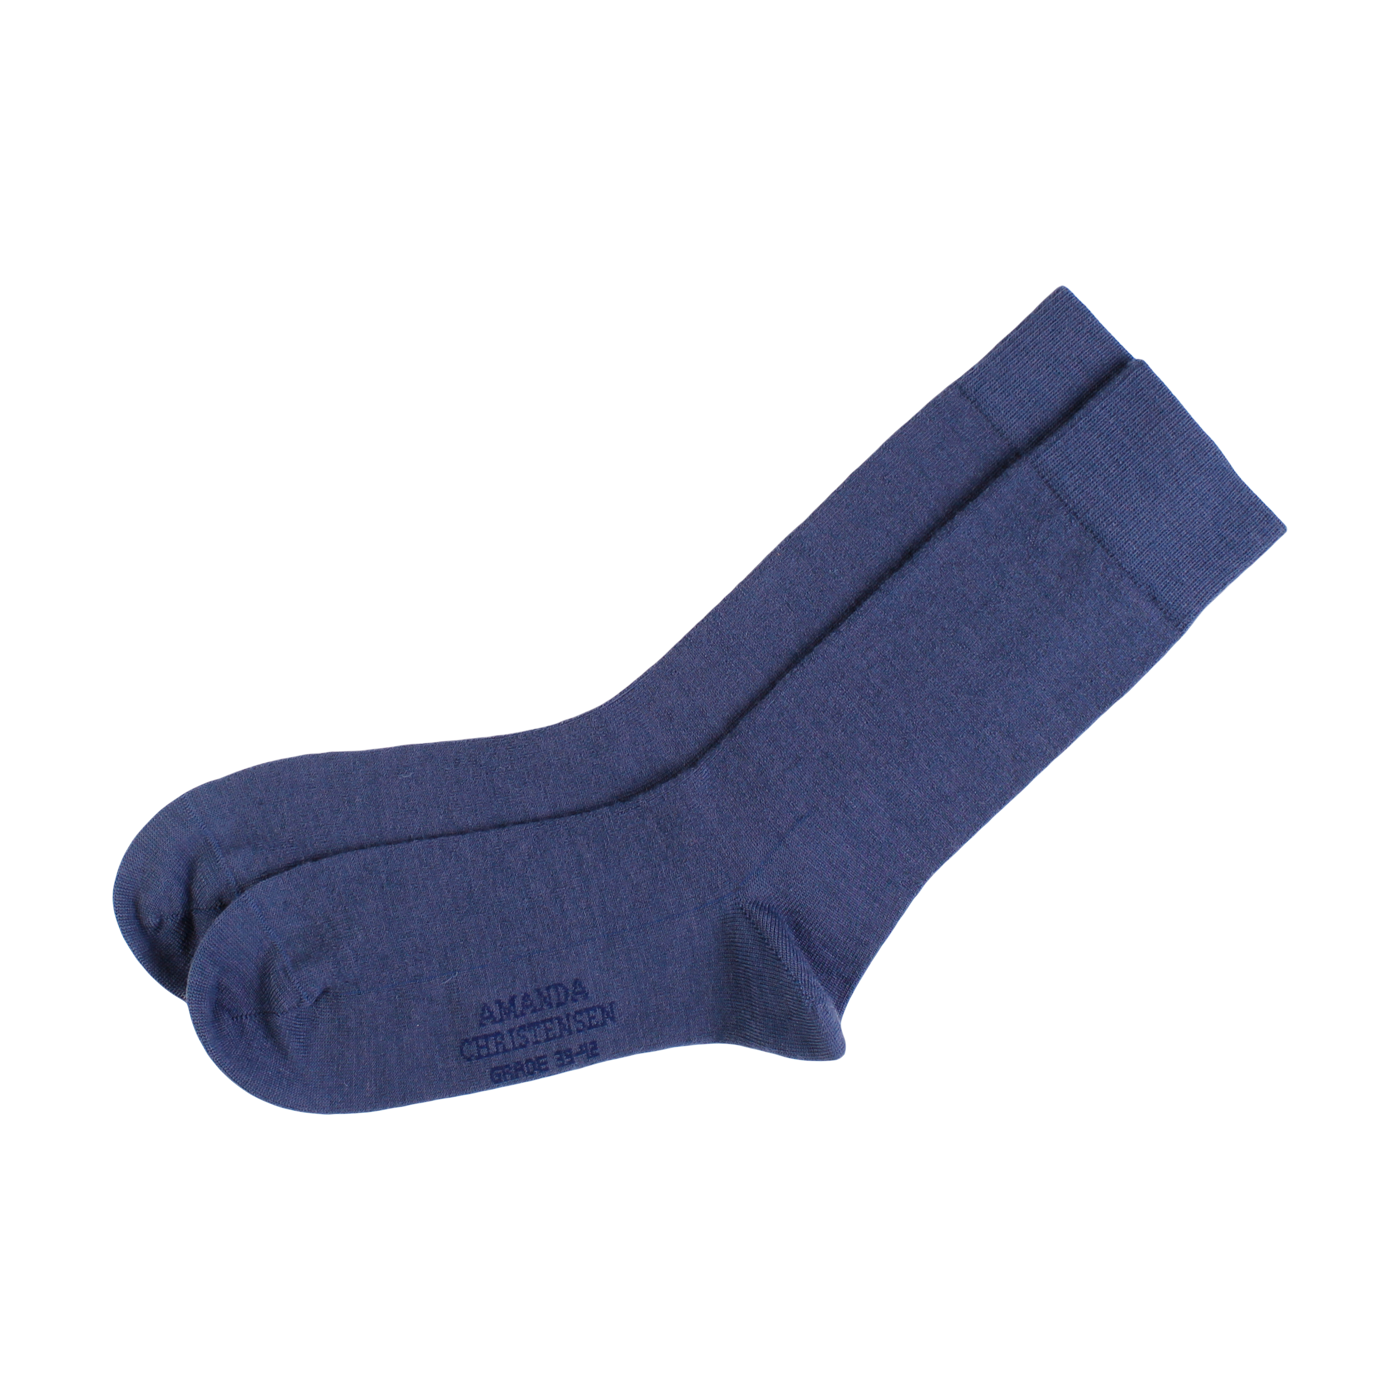 3 PAIR - Grade Merino Wool Blend Italian Mid Calf Socks (Choice of Colors) by Amanda Christensen